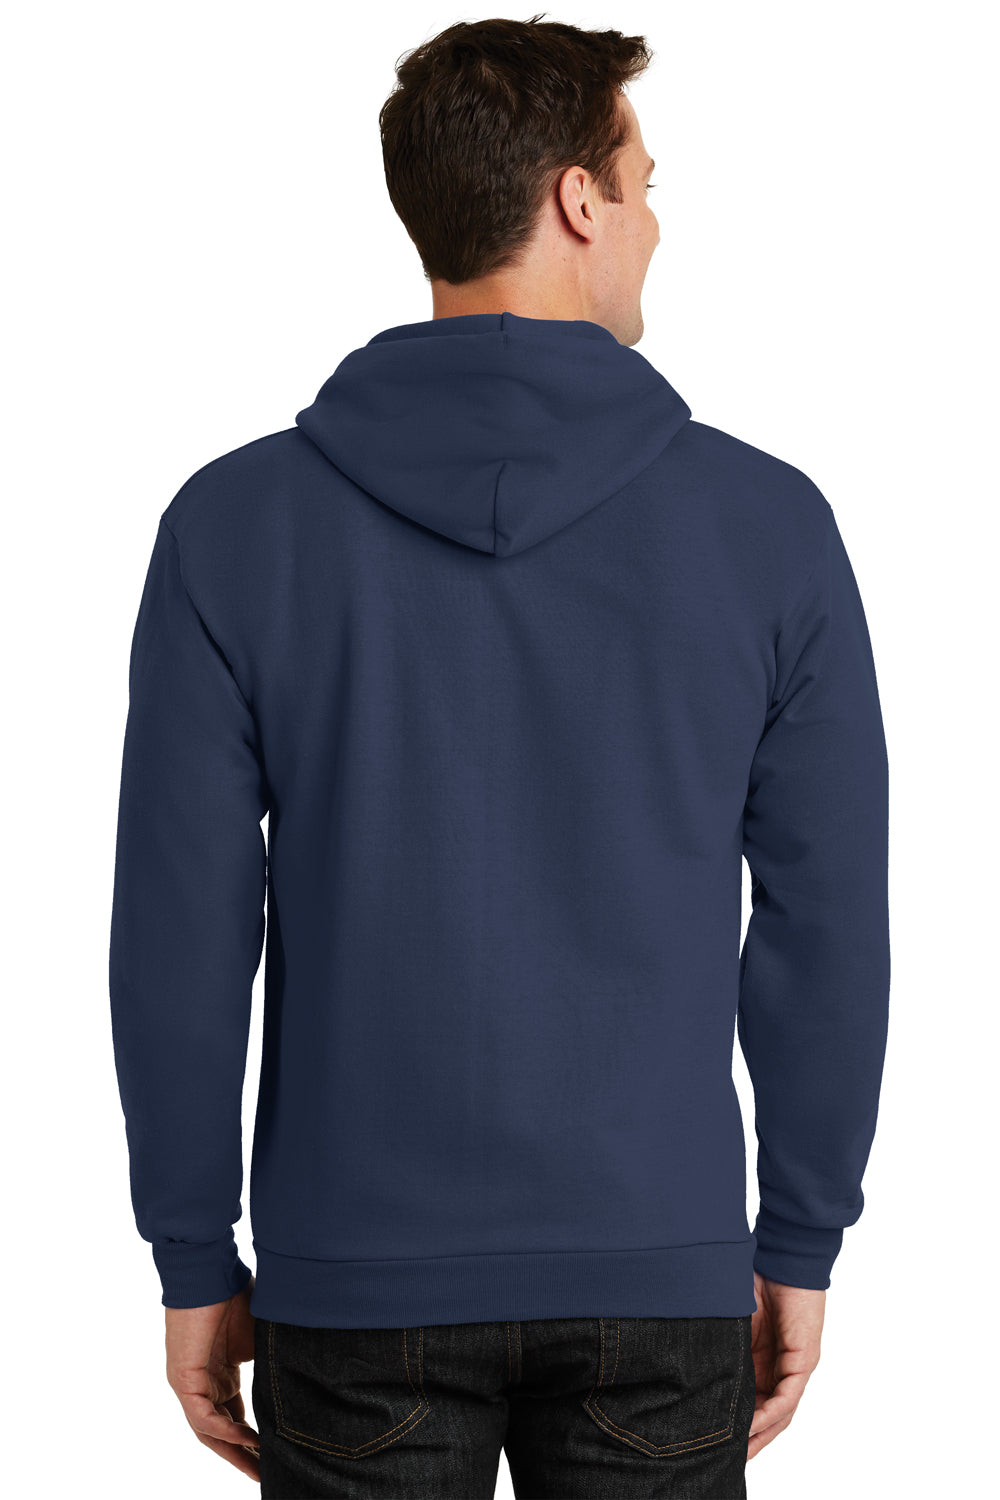 Port & Company PC90ZH Mens Essential Fleece Full Zip Hooded Sweatshirt Hoodie Navy Blue Back